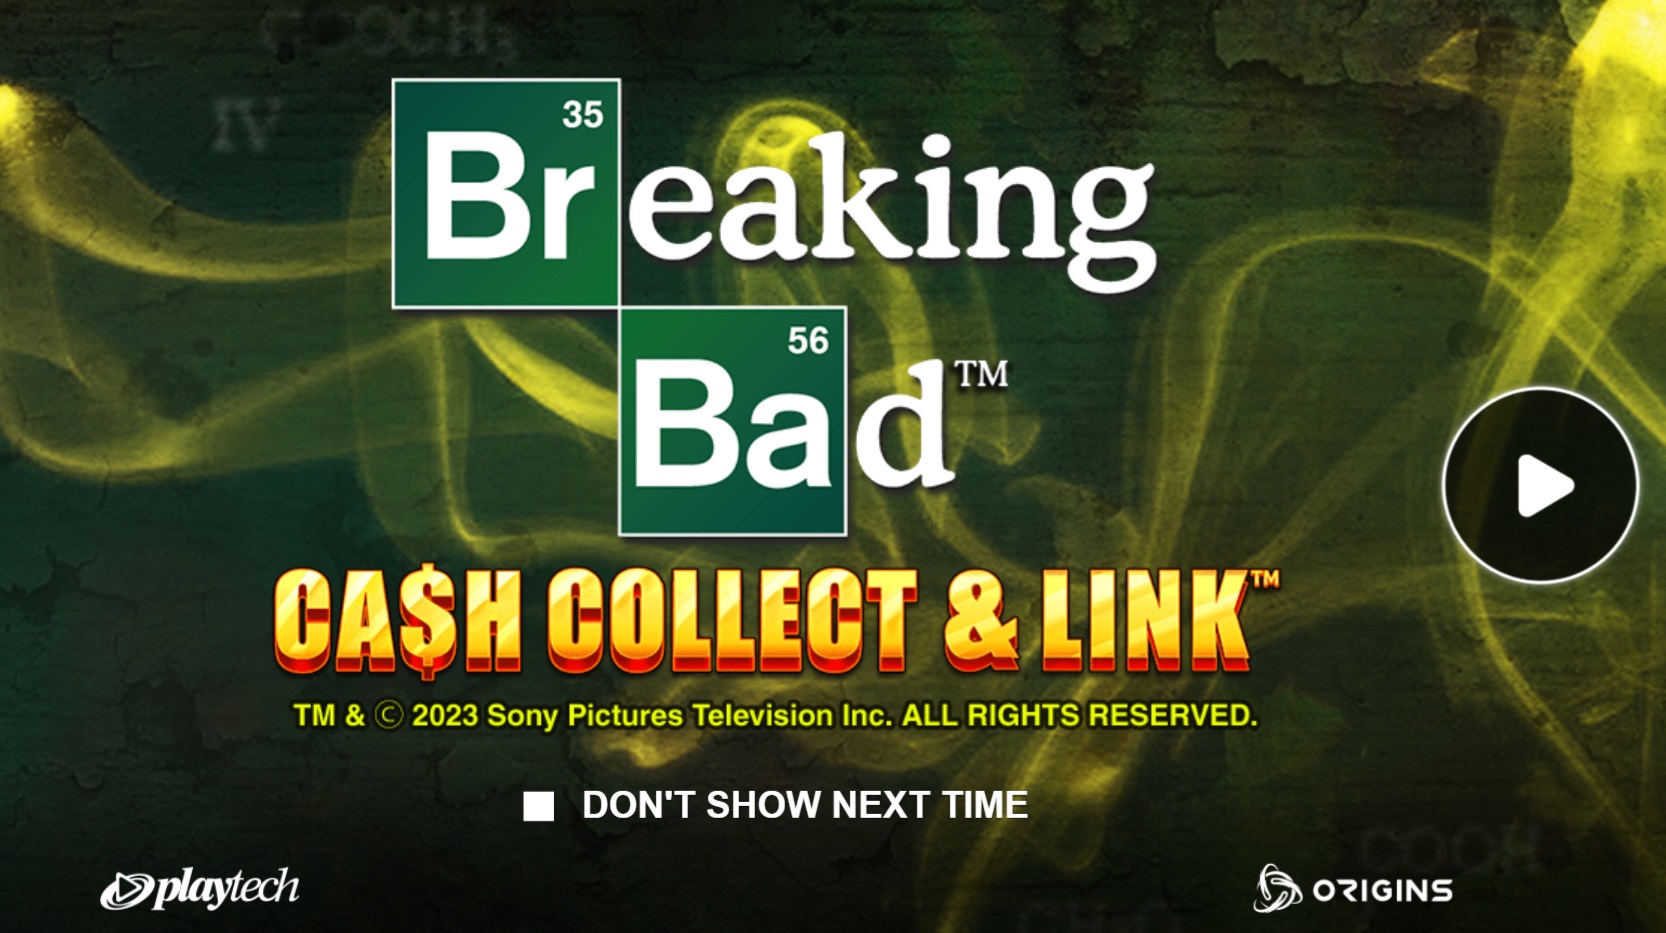 Breaking Bad Cash Collect & Link Screenshot - Playtech Origins - MGJ